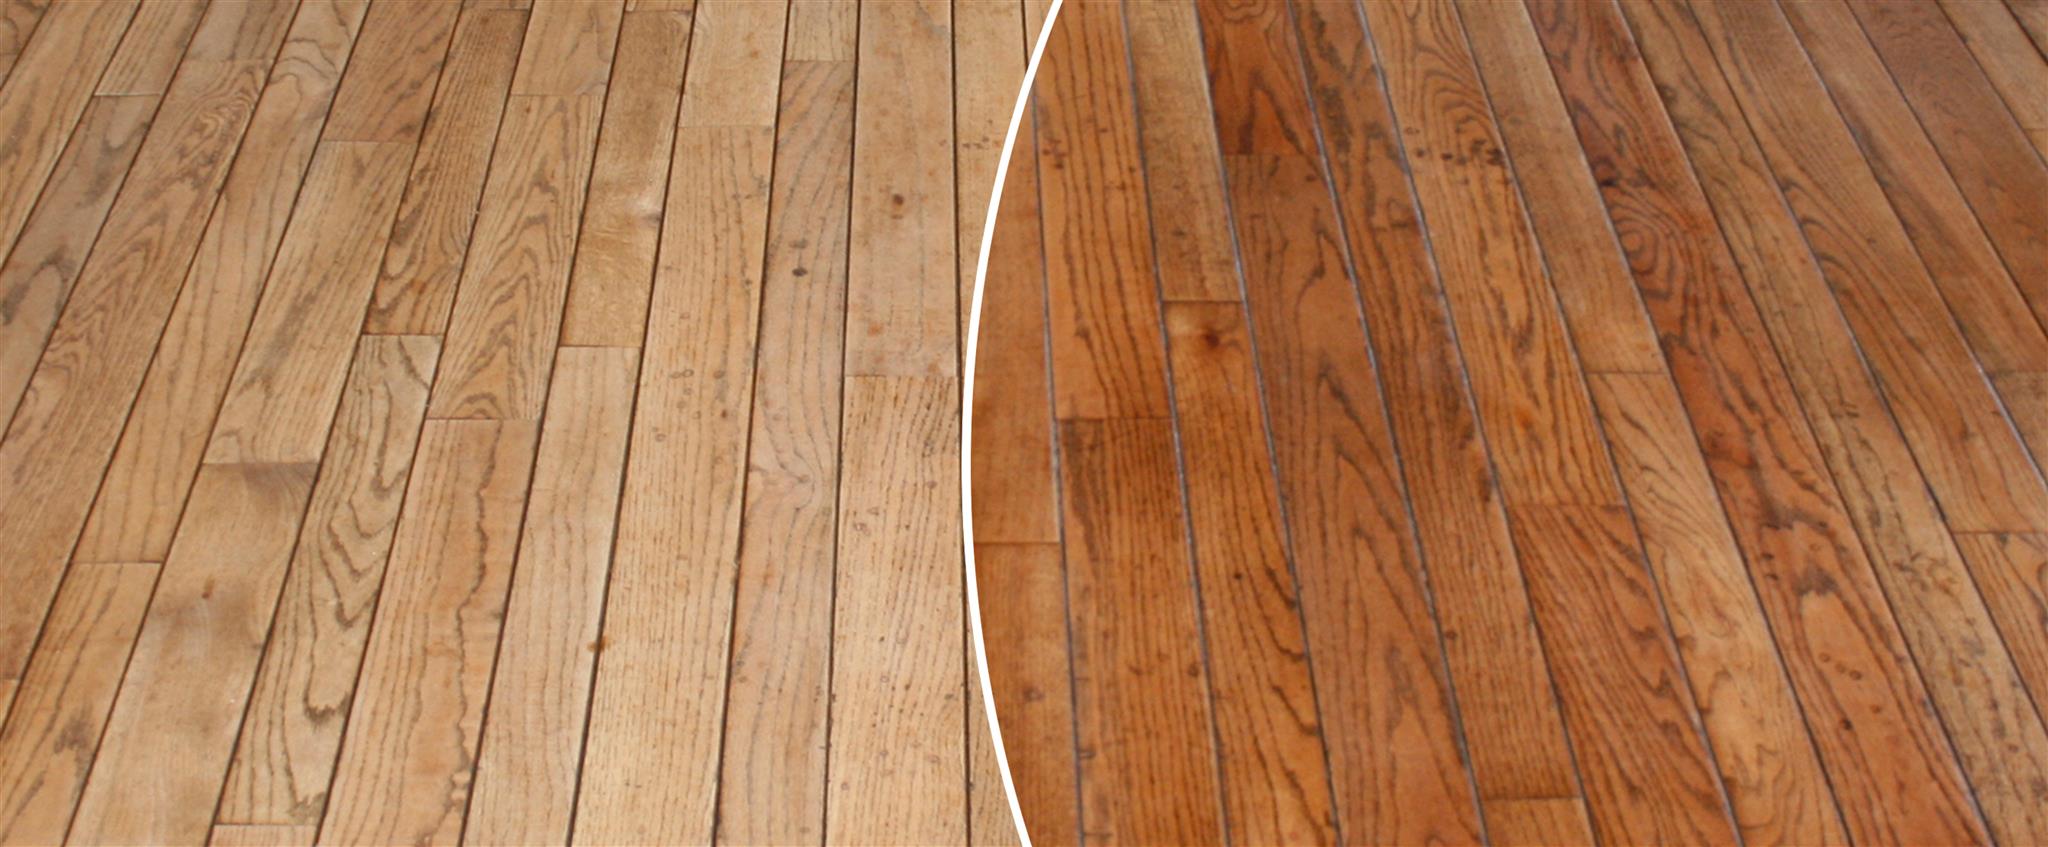 Wood Floor Refinishing Services N Hance, Hardwood Floor Refinishing Fargo Nd